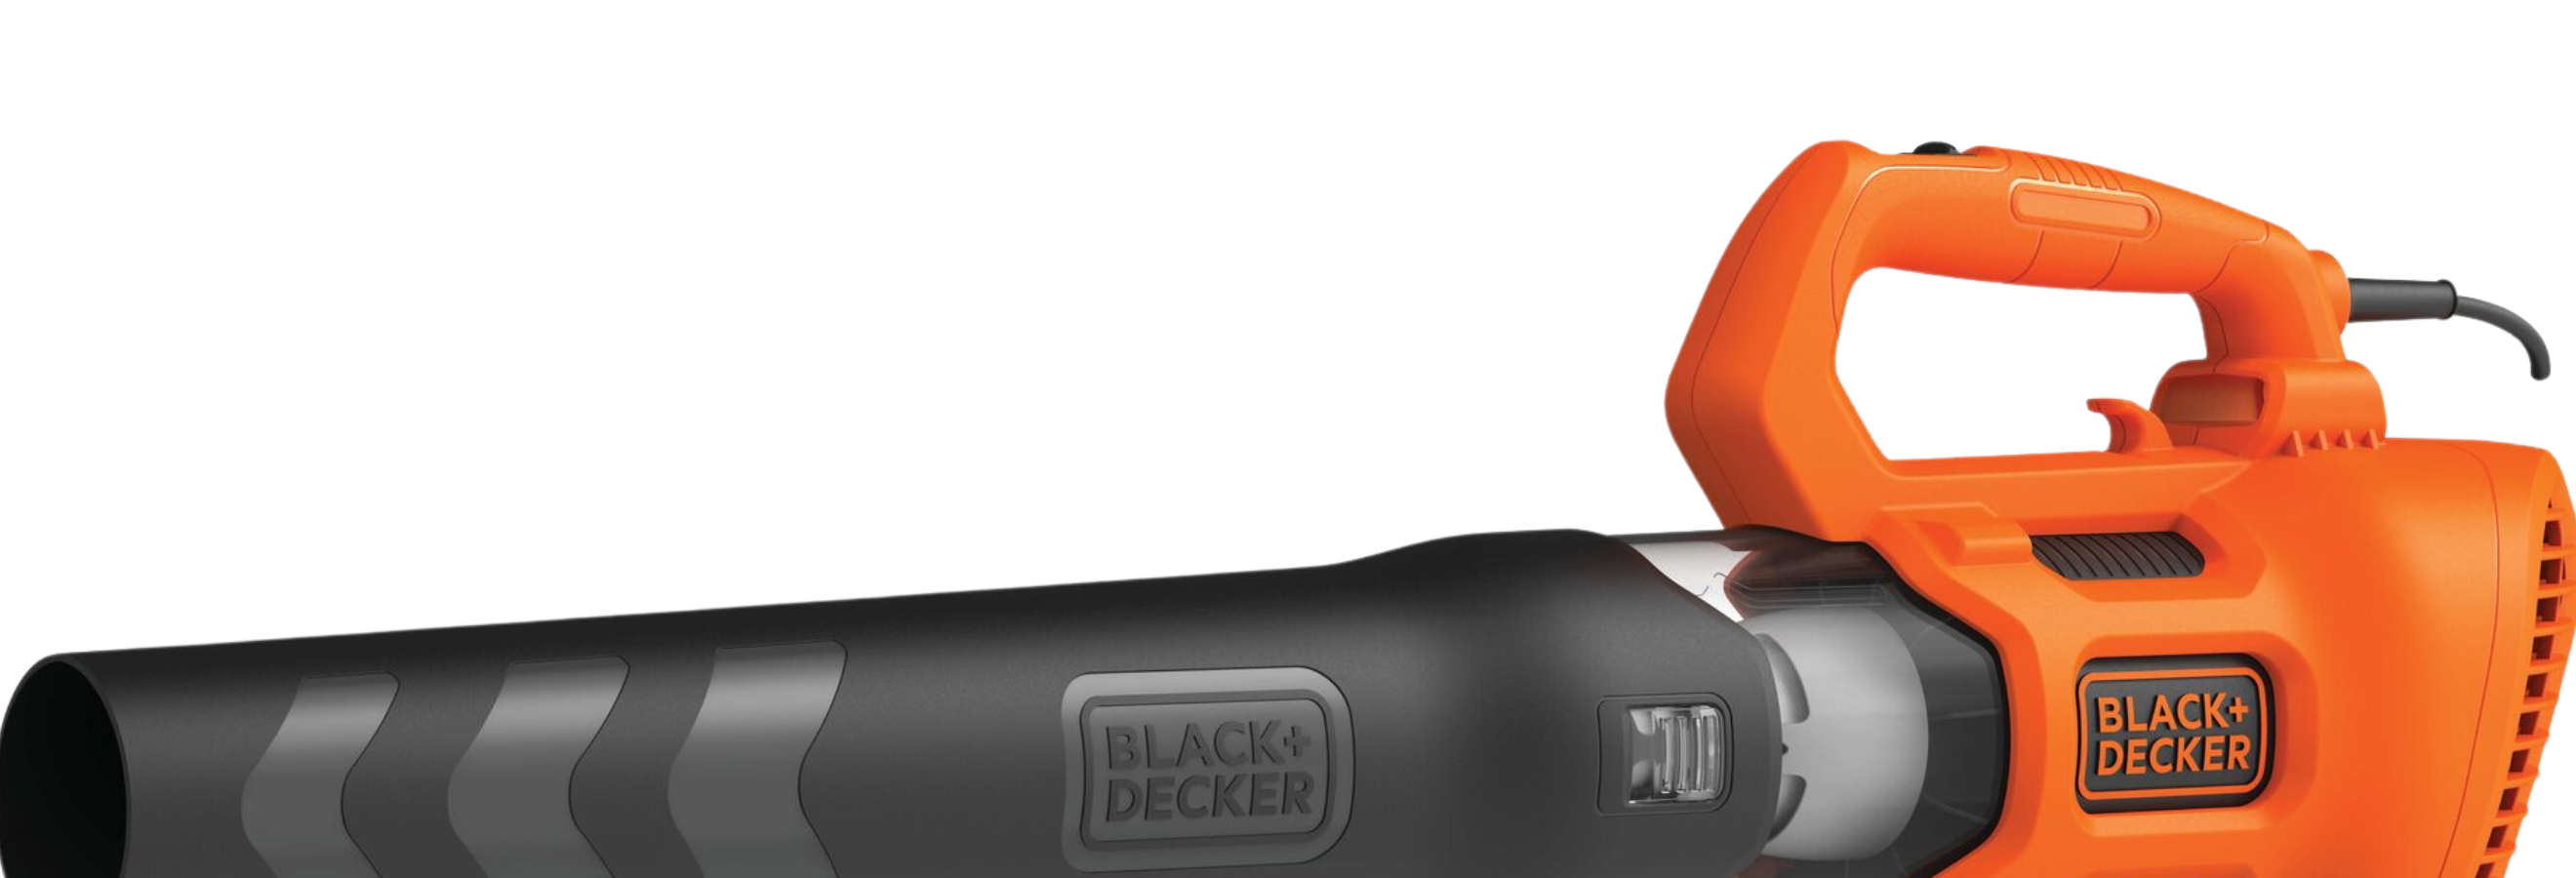 BEST LEAF BLOWER (That I own) Black & Decker BEBL750 9 amp 140 mph